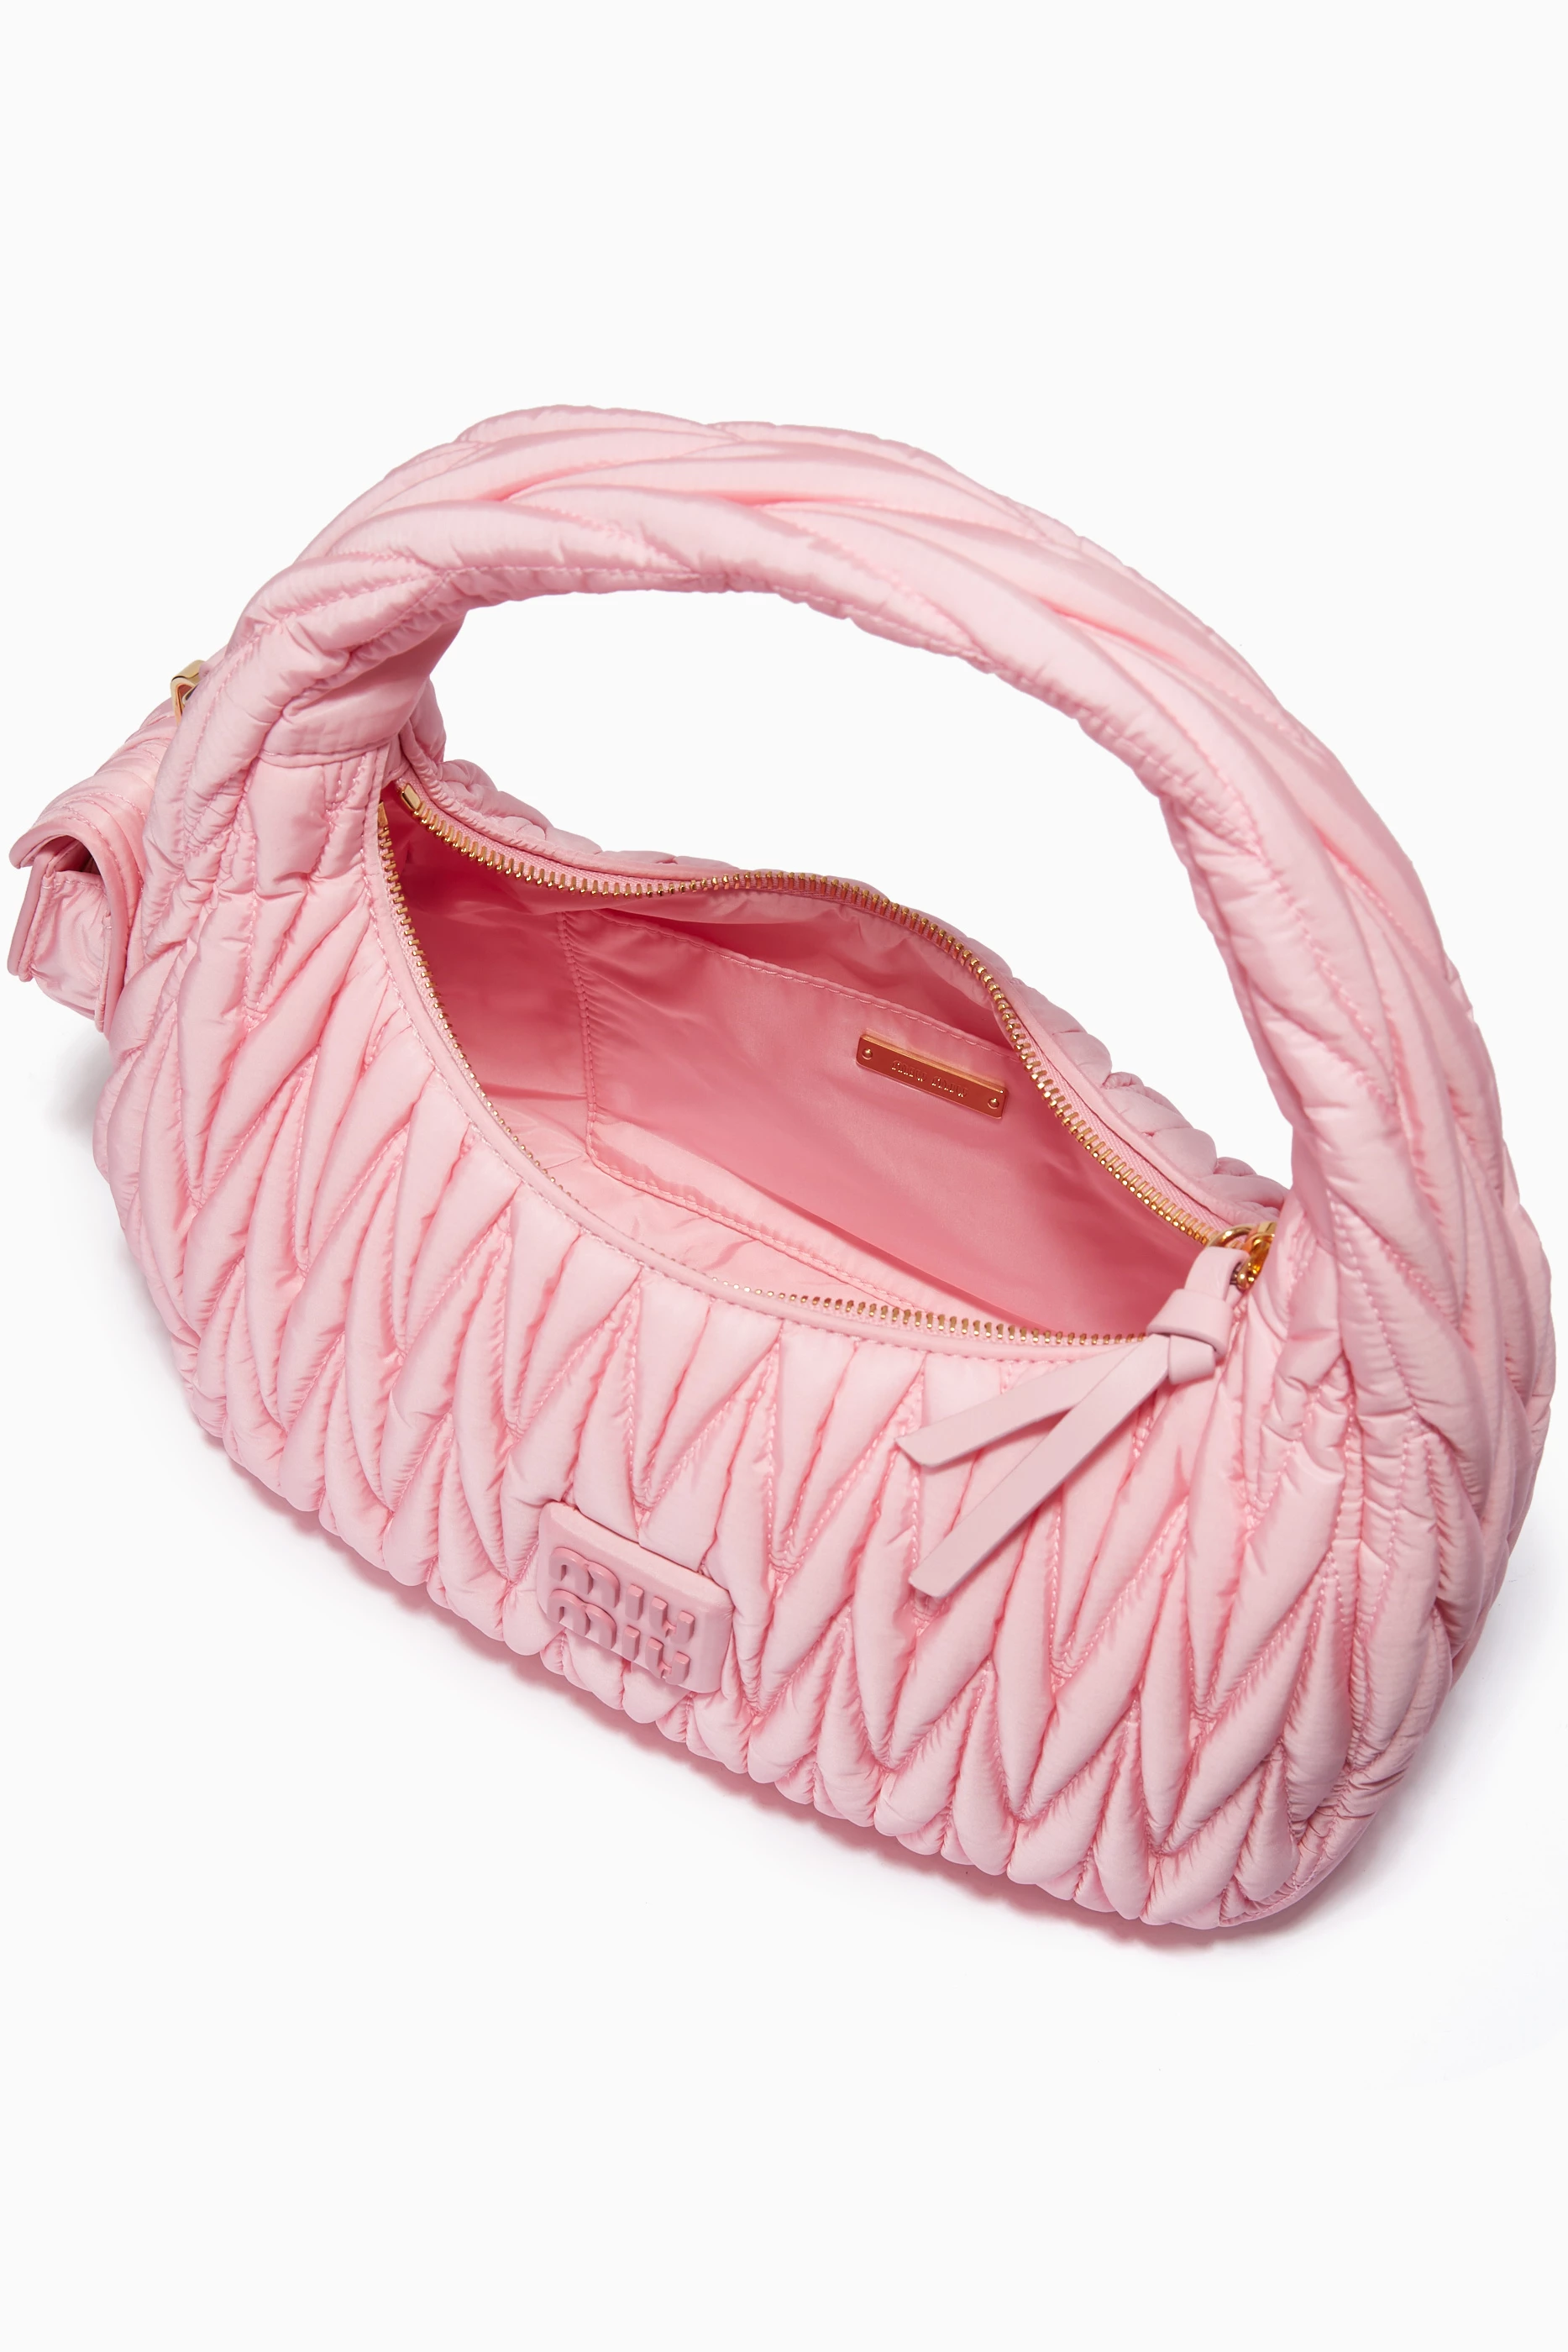 Miu wander handbag Miu Miu Pink in Polyester - 36526462